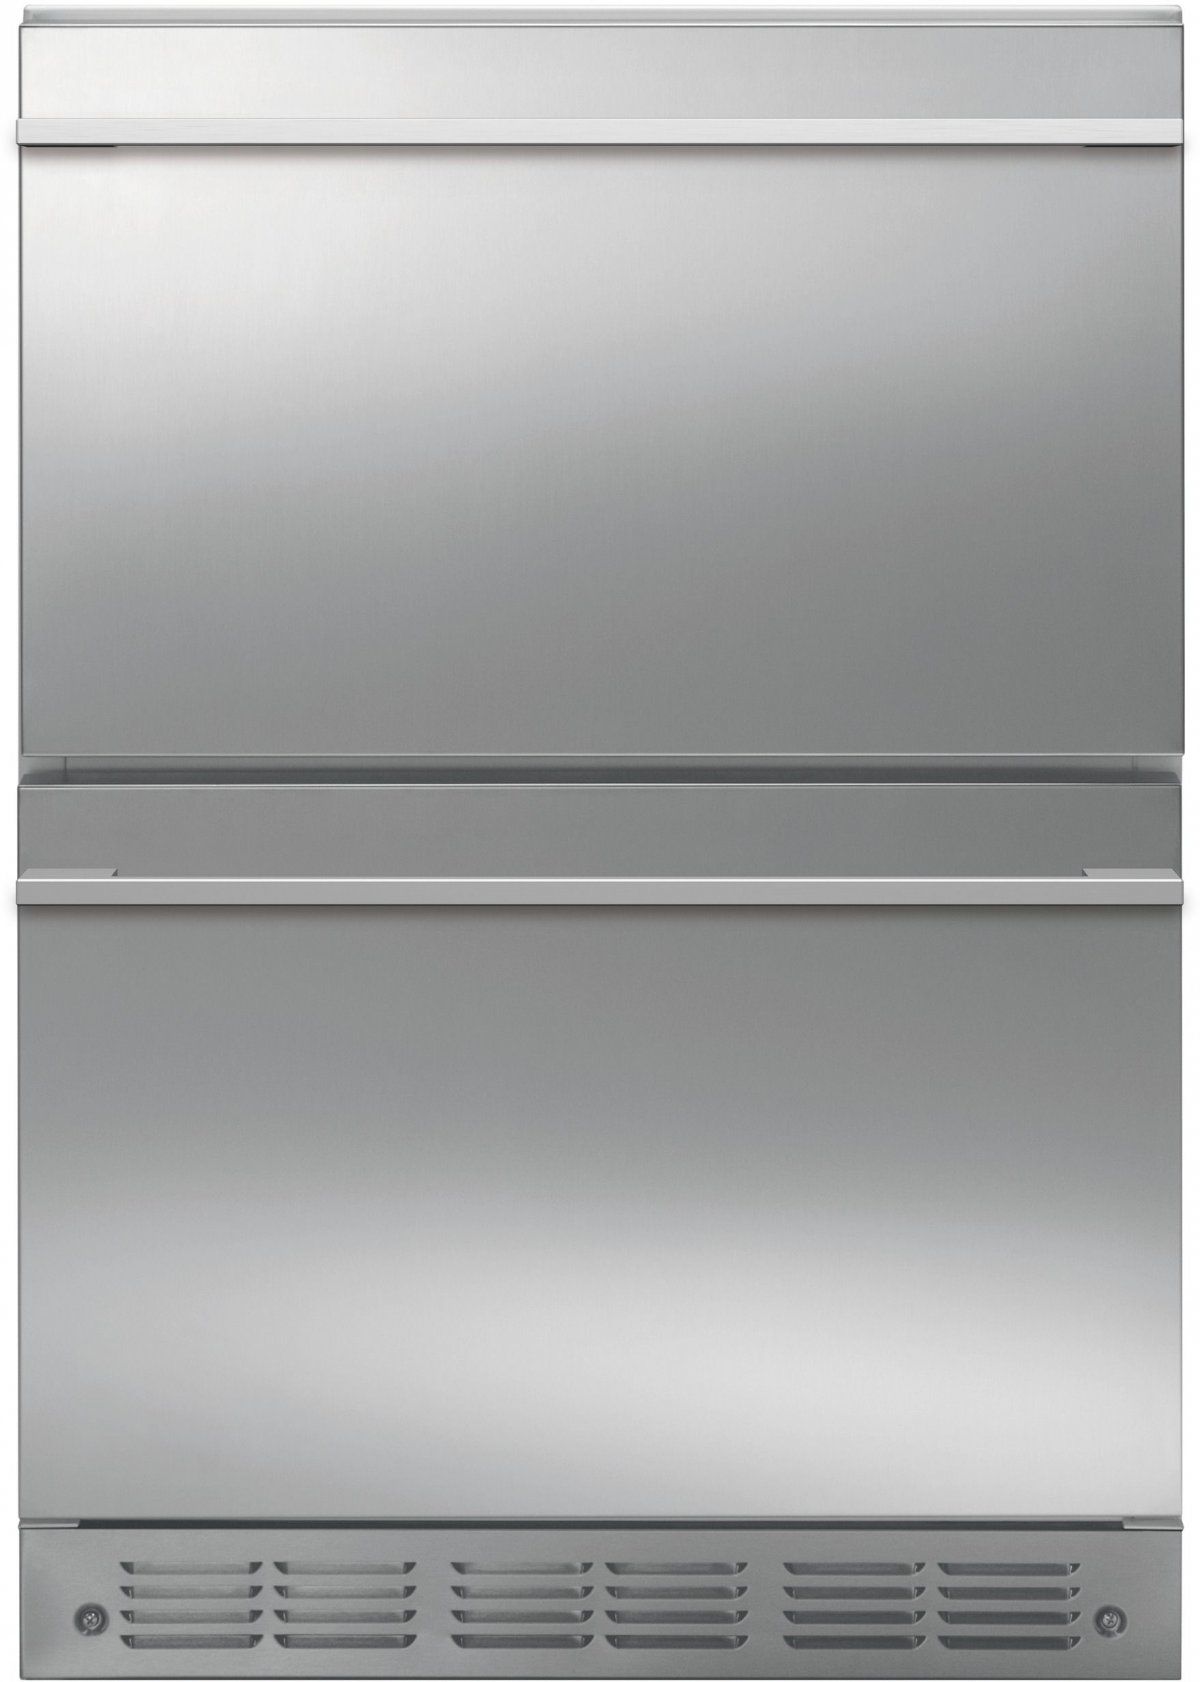 Monogram® 5.0 Cu. Ft. Stainless Steel Refrigerator Drawers